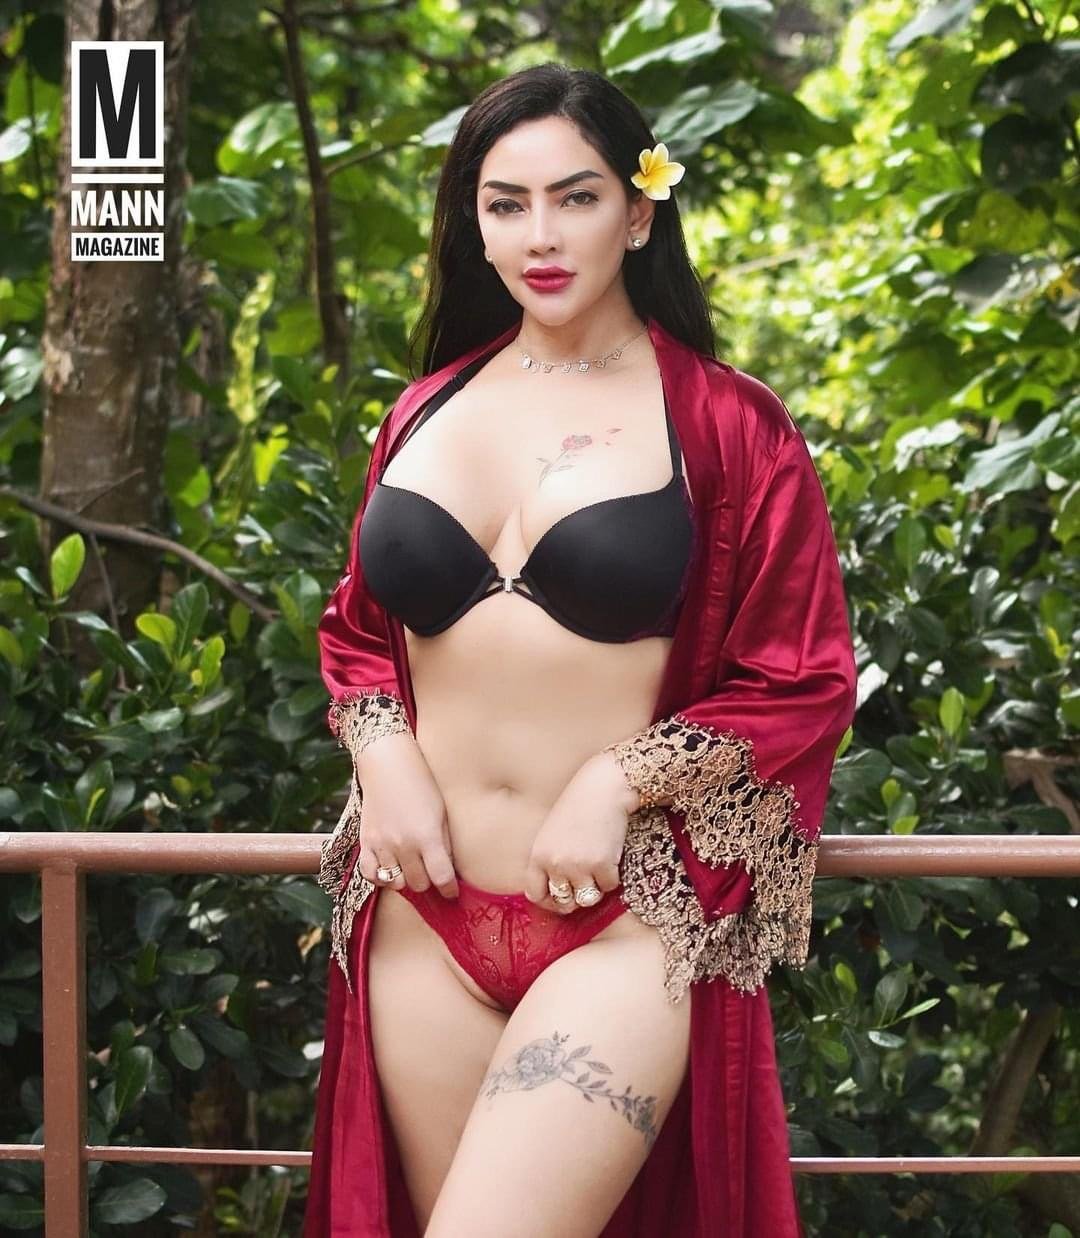 Melliyana Sex - Sisca Mellyana - Free nude pics, galleries & more at Babepedia